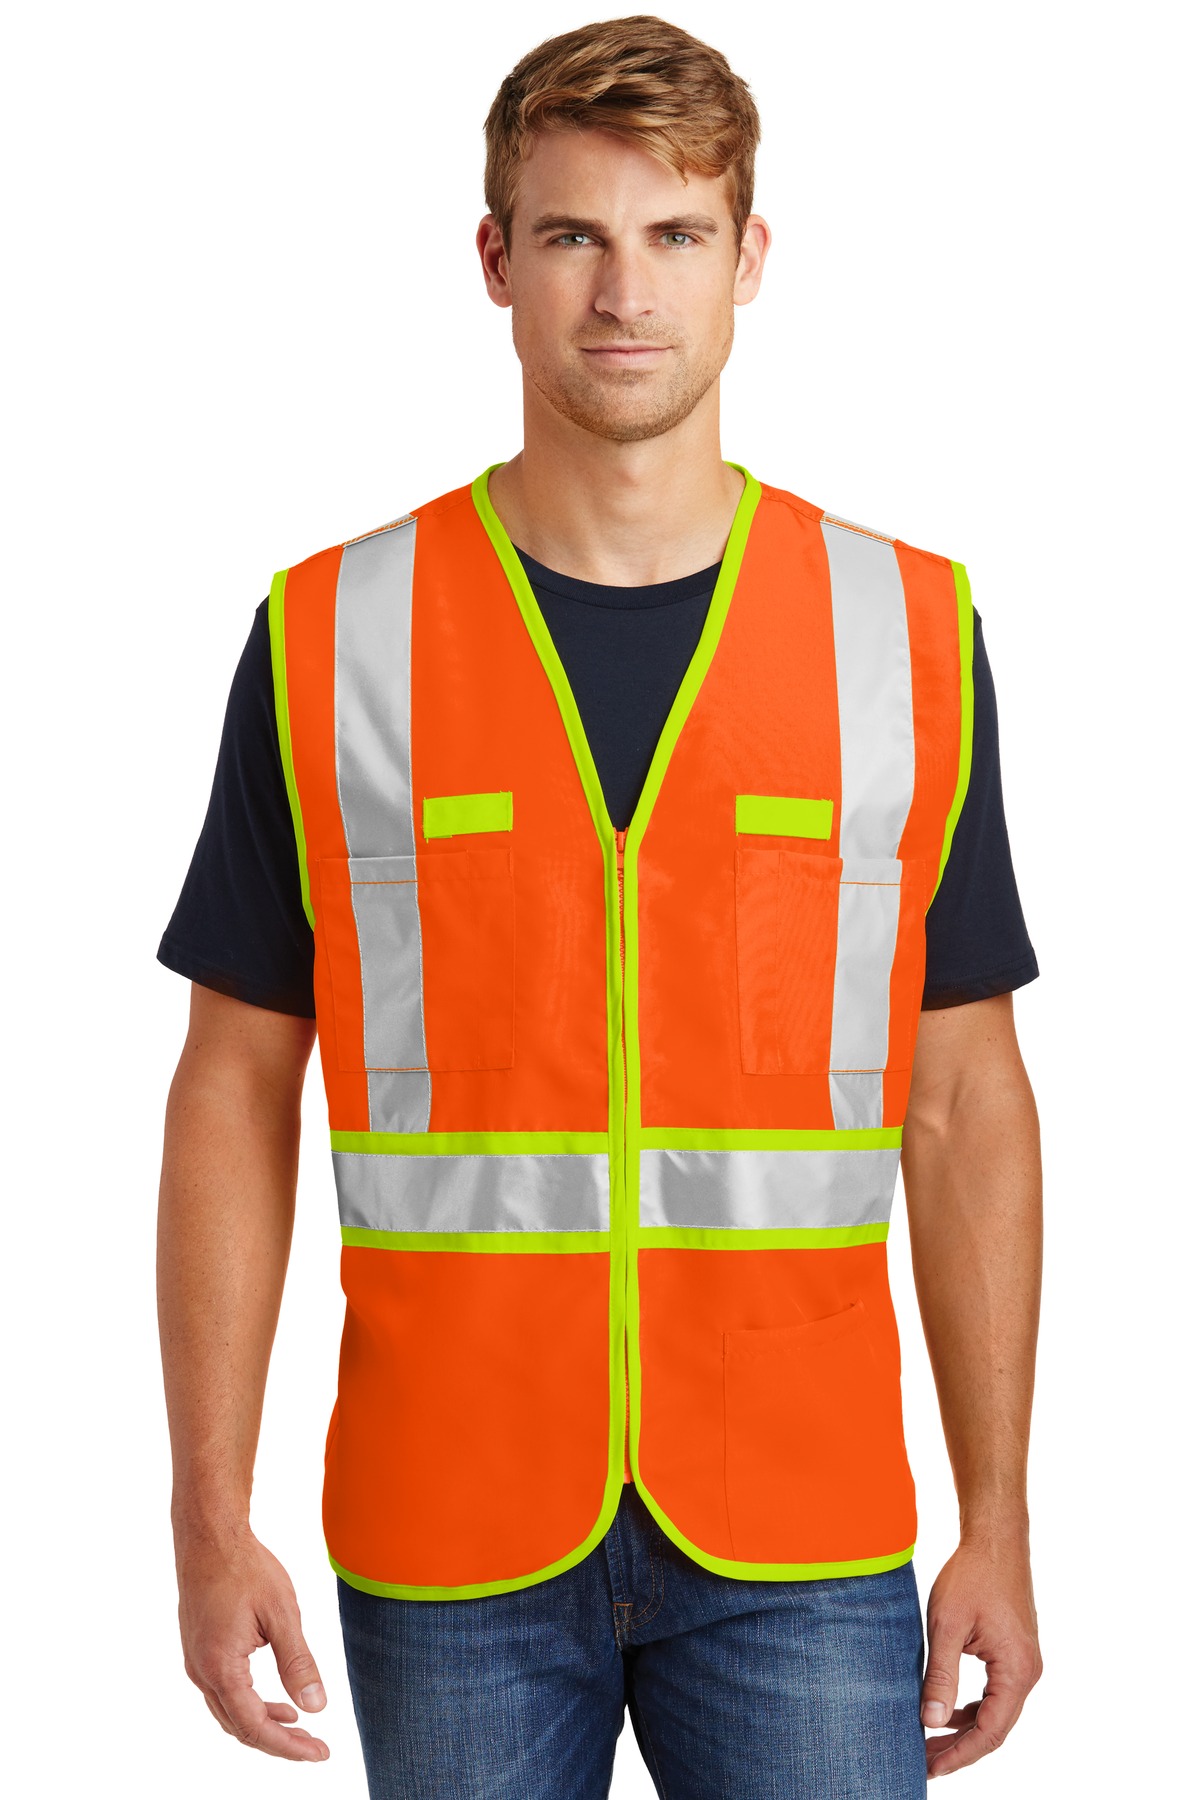 CornerStone - ANSI 107 Class 2 Dual-Color Safety Vest....